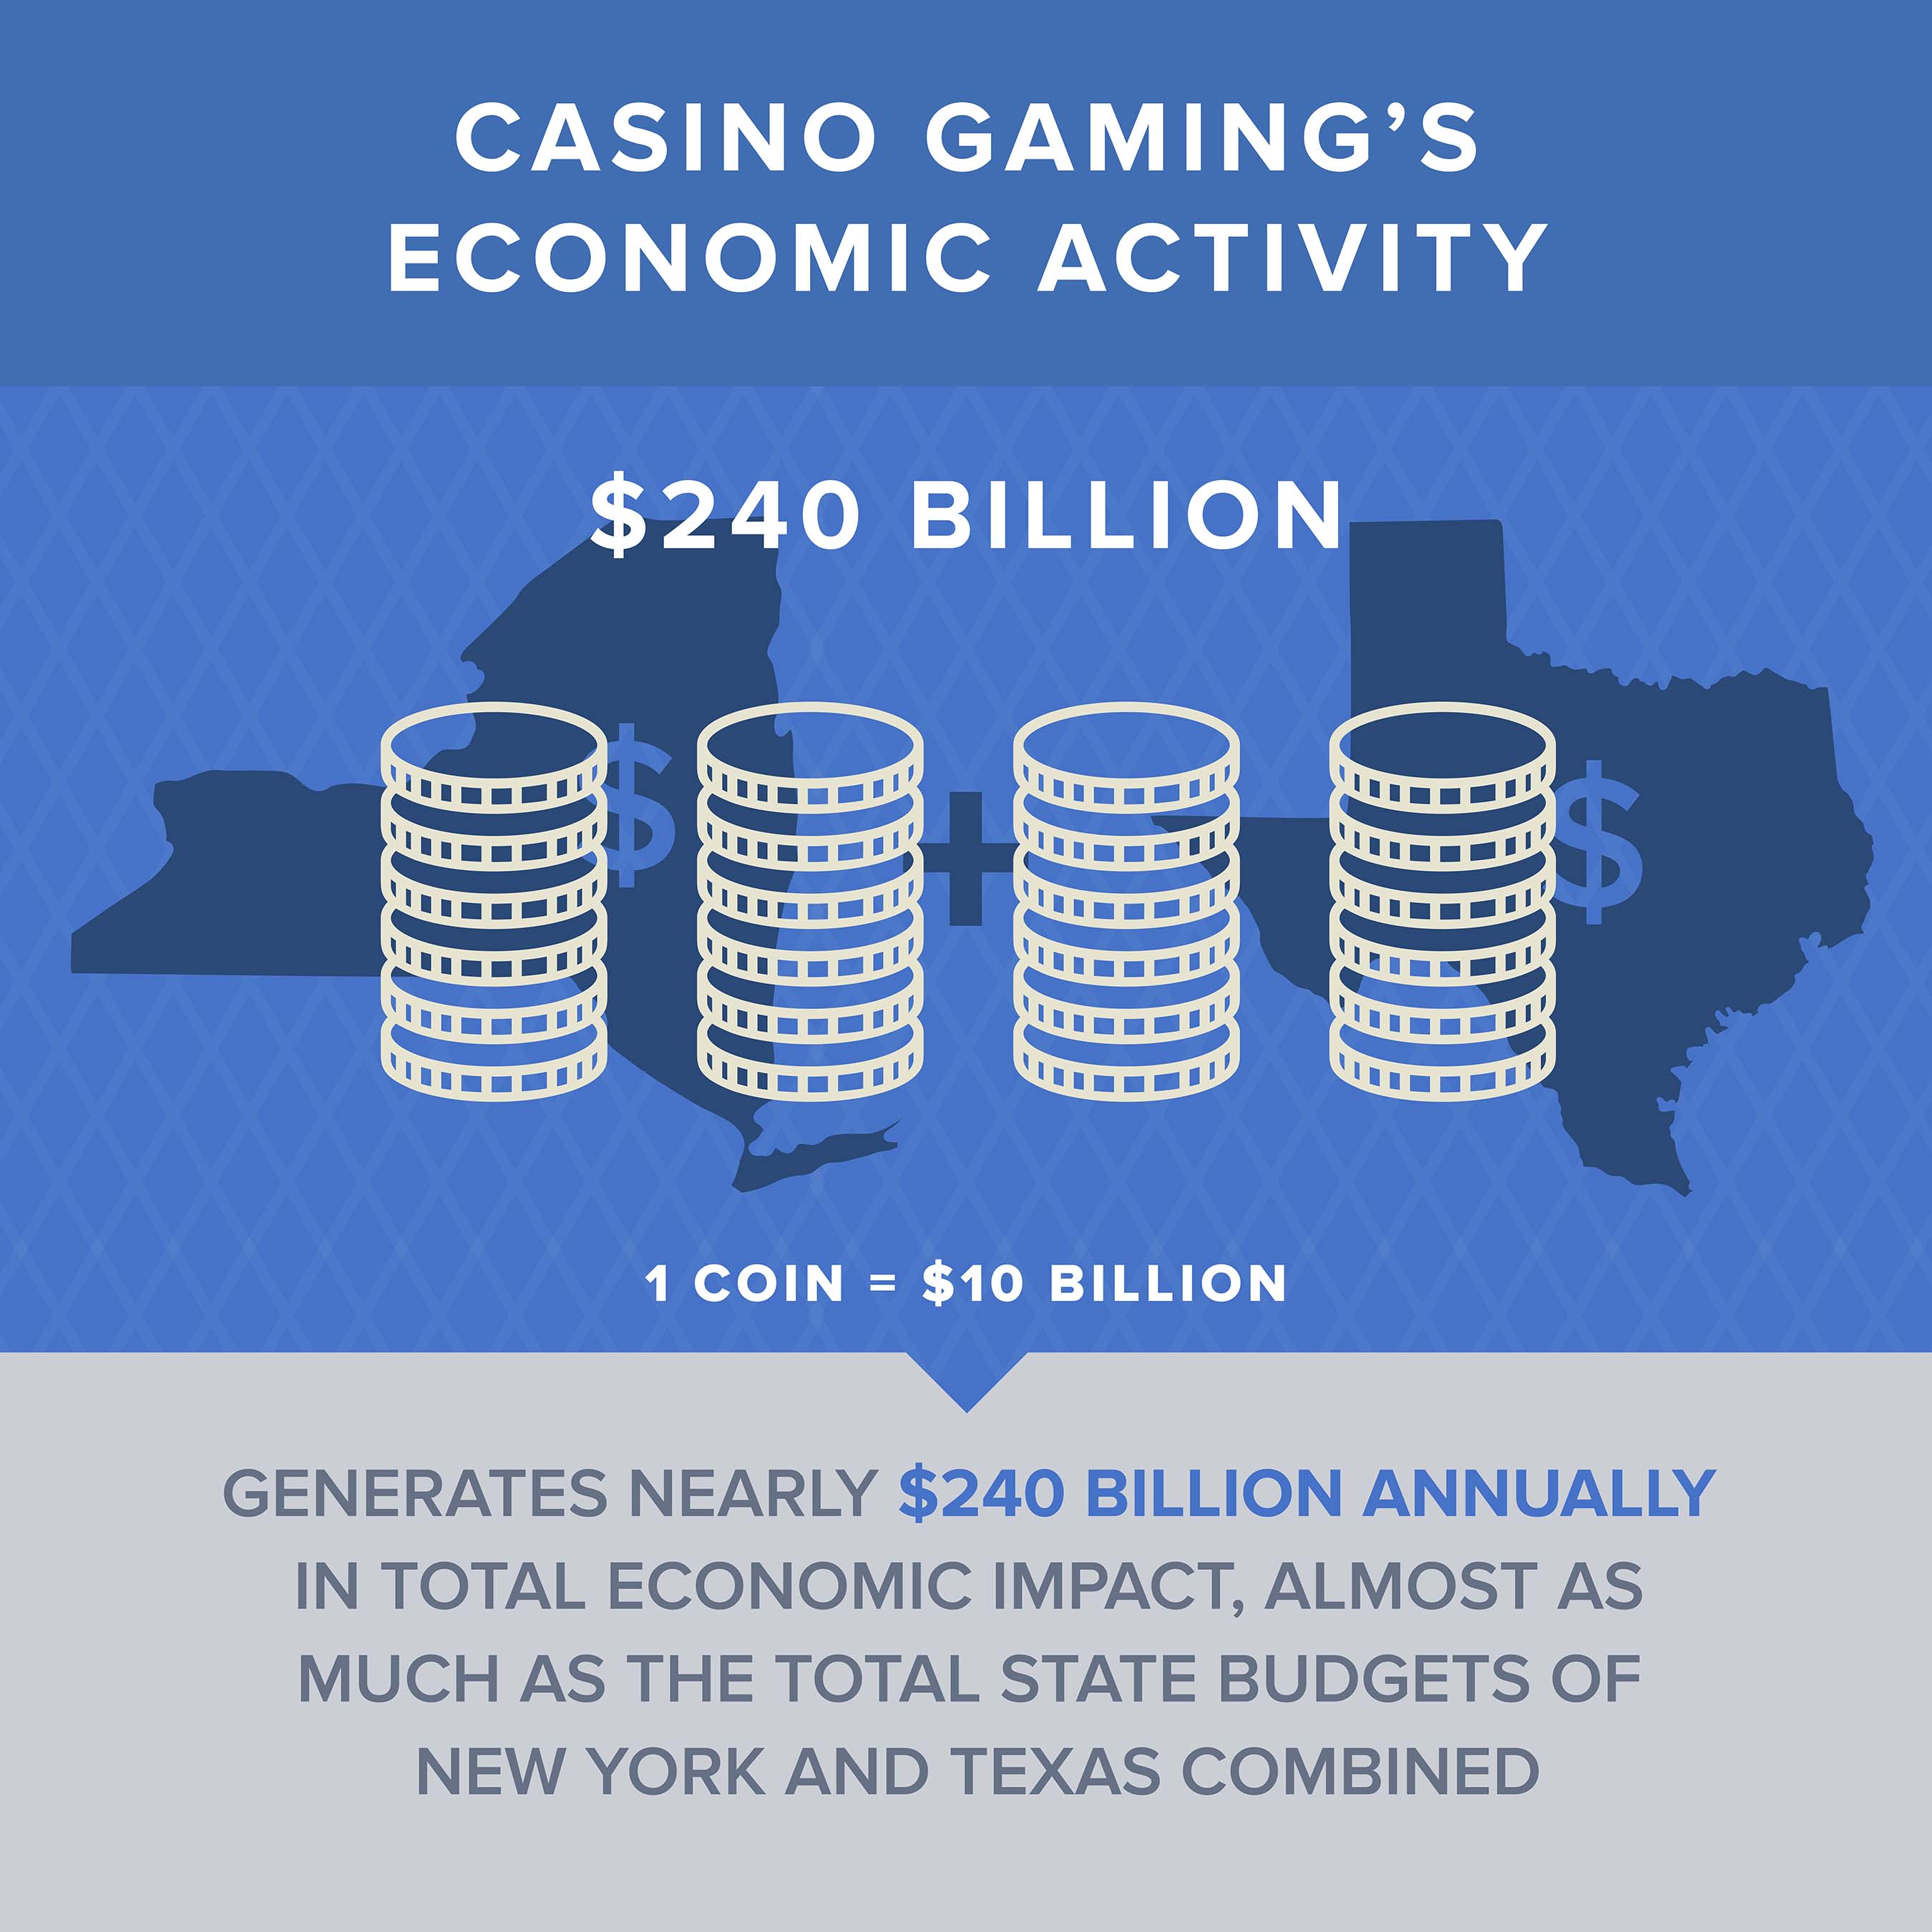 Casino gaming’s economic activity totals $240 billion, according to new Oxford Economics’ study.